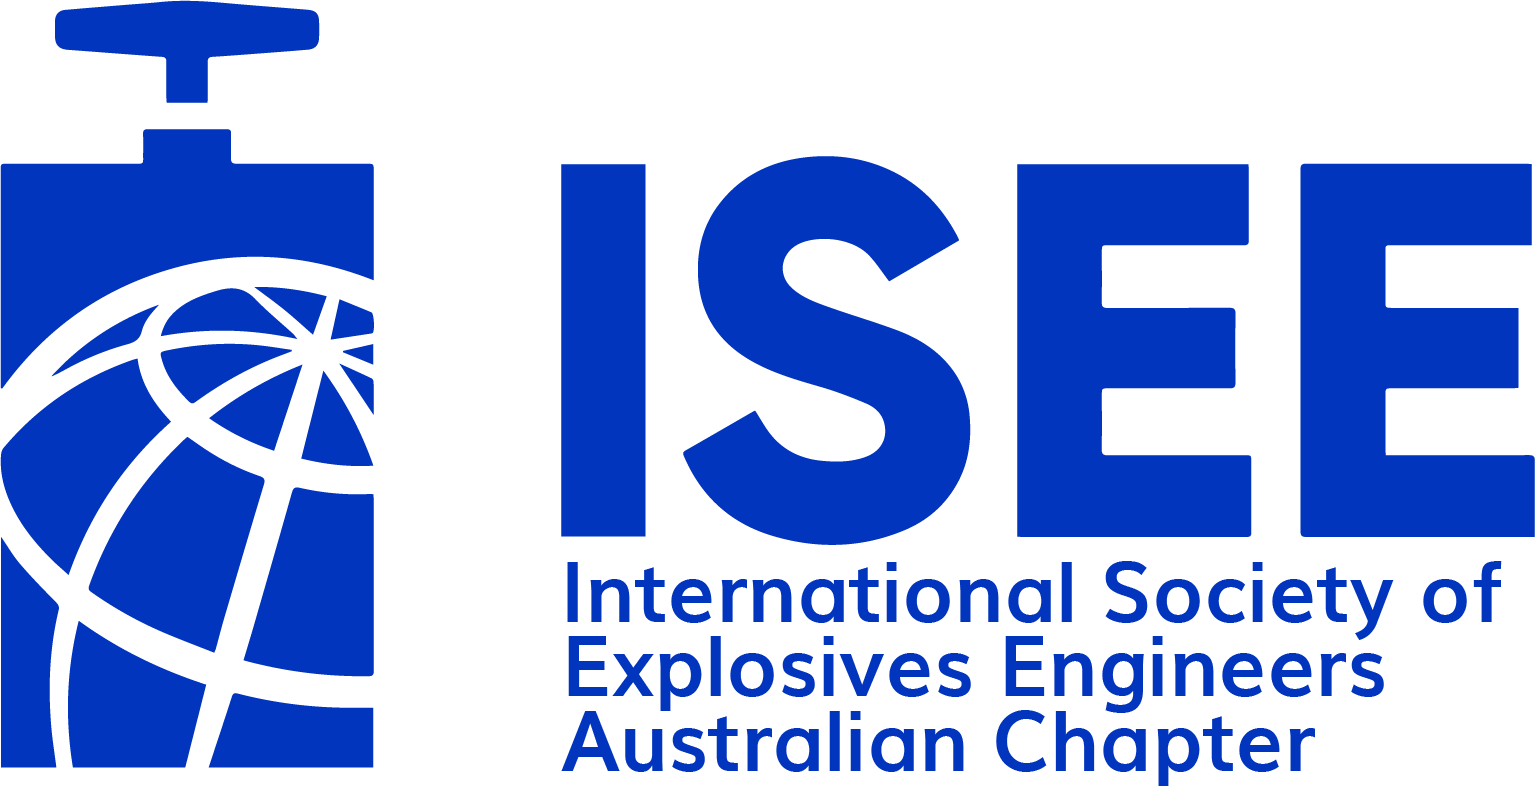 International Society of Explosives Engineers, Australian Chapter